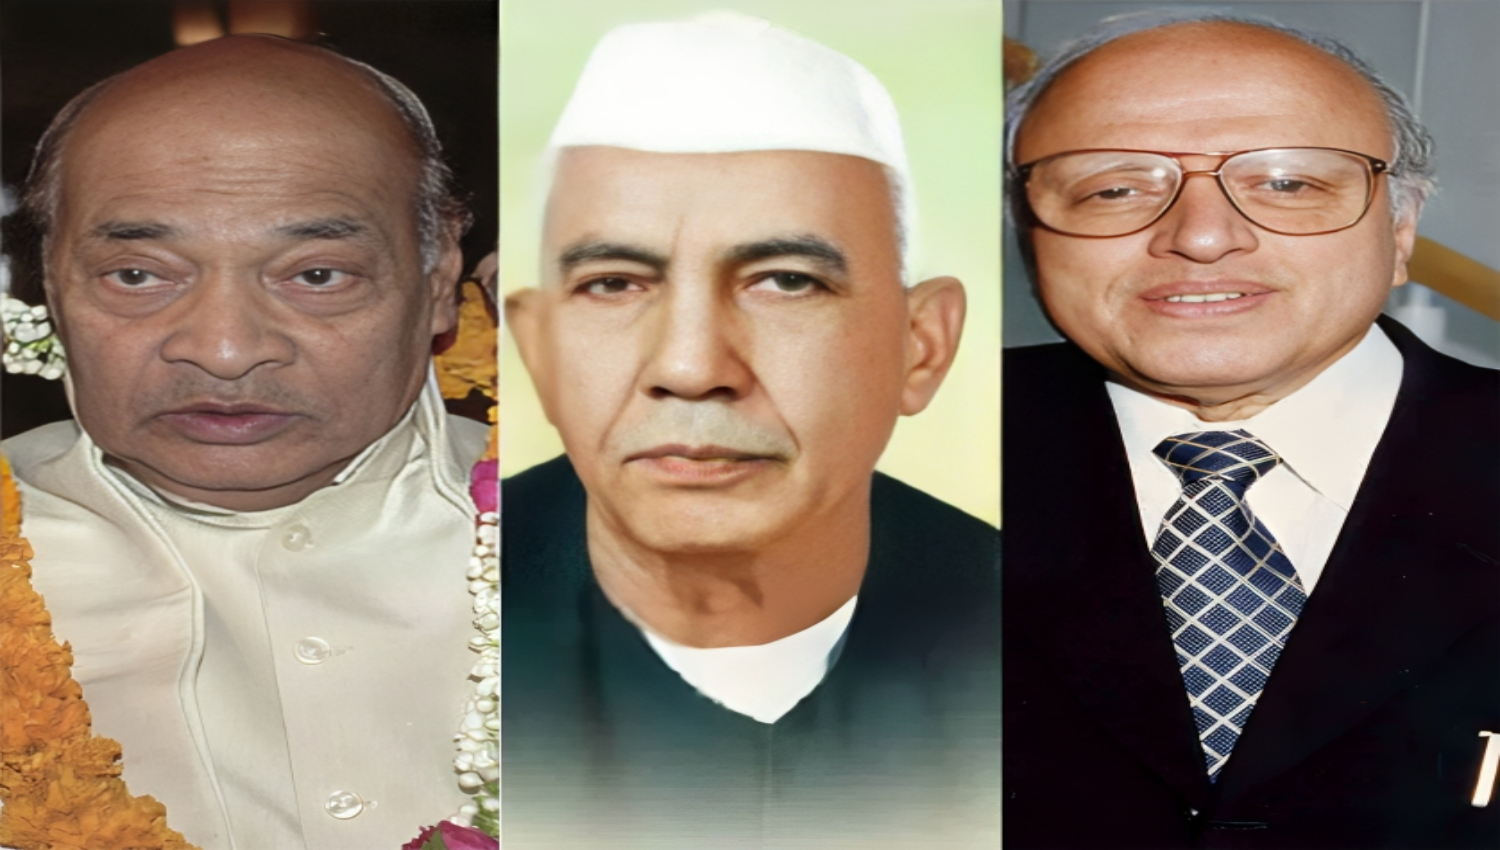 “PM Modi Unveils Prestigious Bharat Ratna Honors for Visionary Leaders: PV Narasimha Rao, Chaudhary Charan Singh, and Scientist MS Swaminathan”